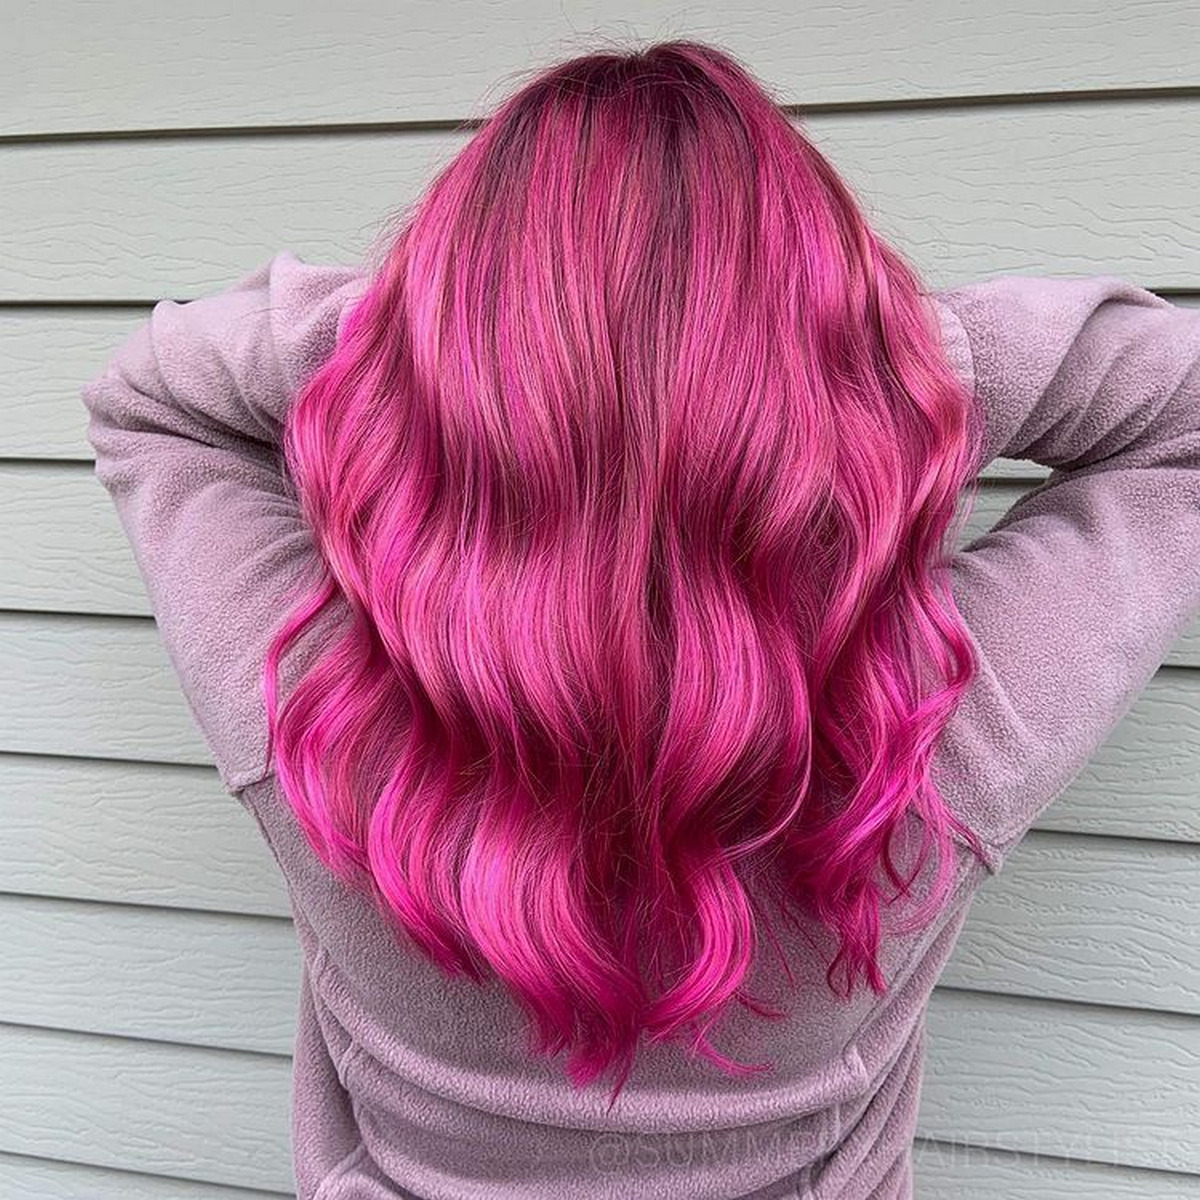 Medium-Length Pink Hair